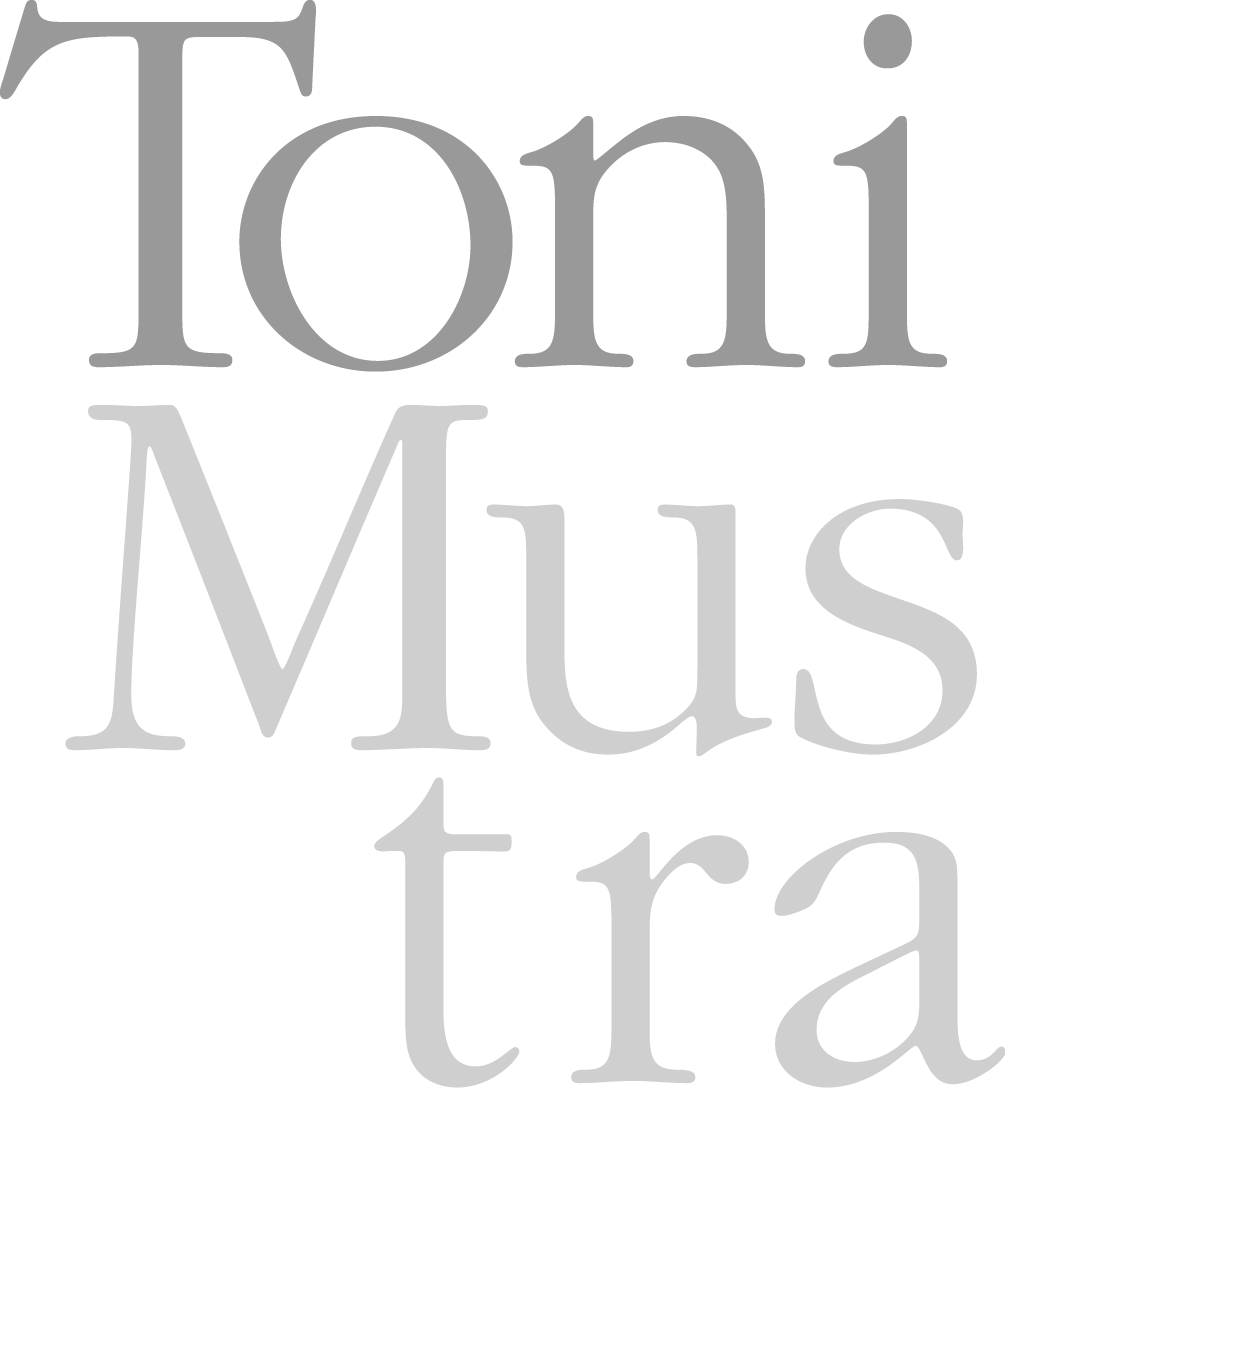 Toni Mustra : Photographer